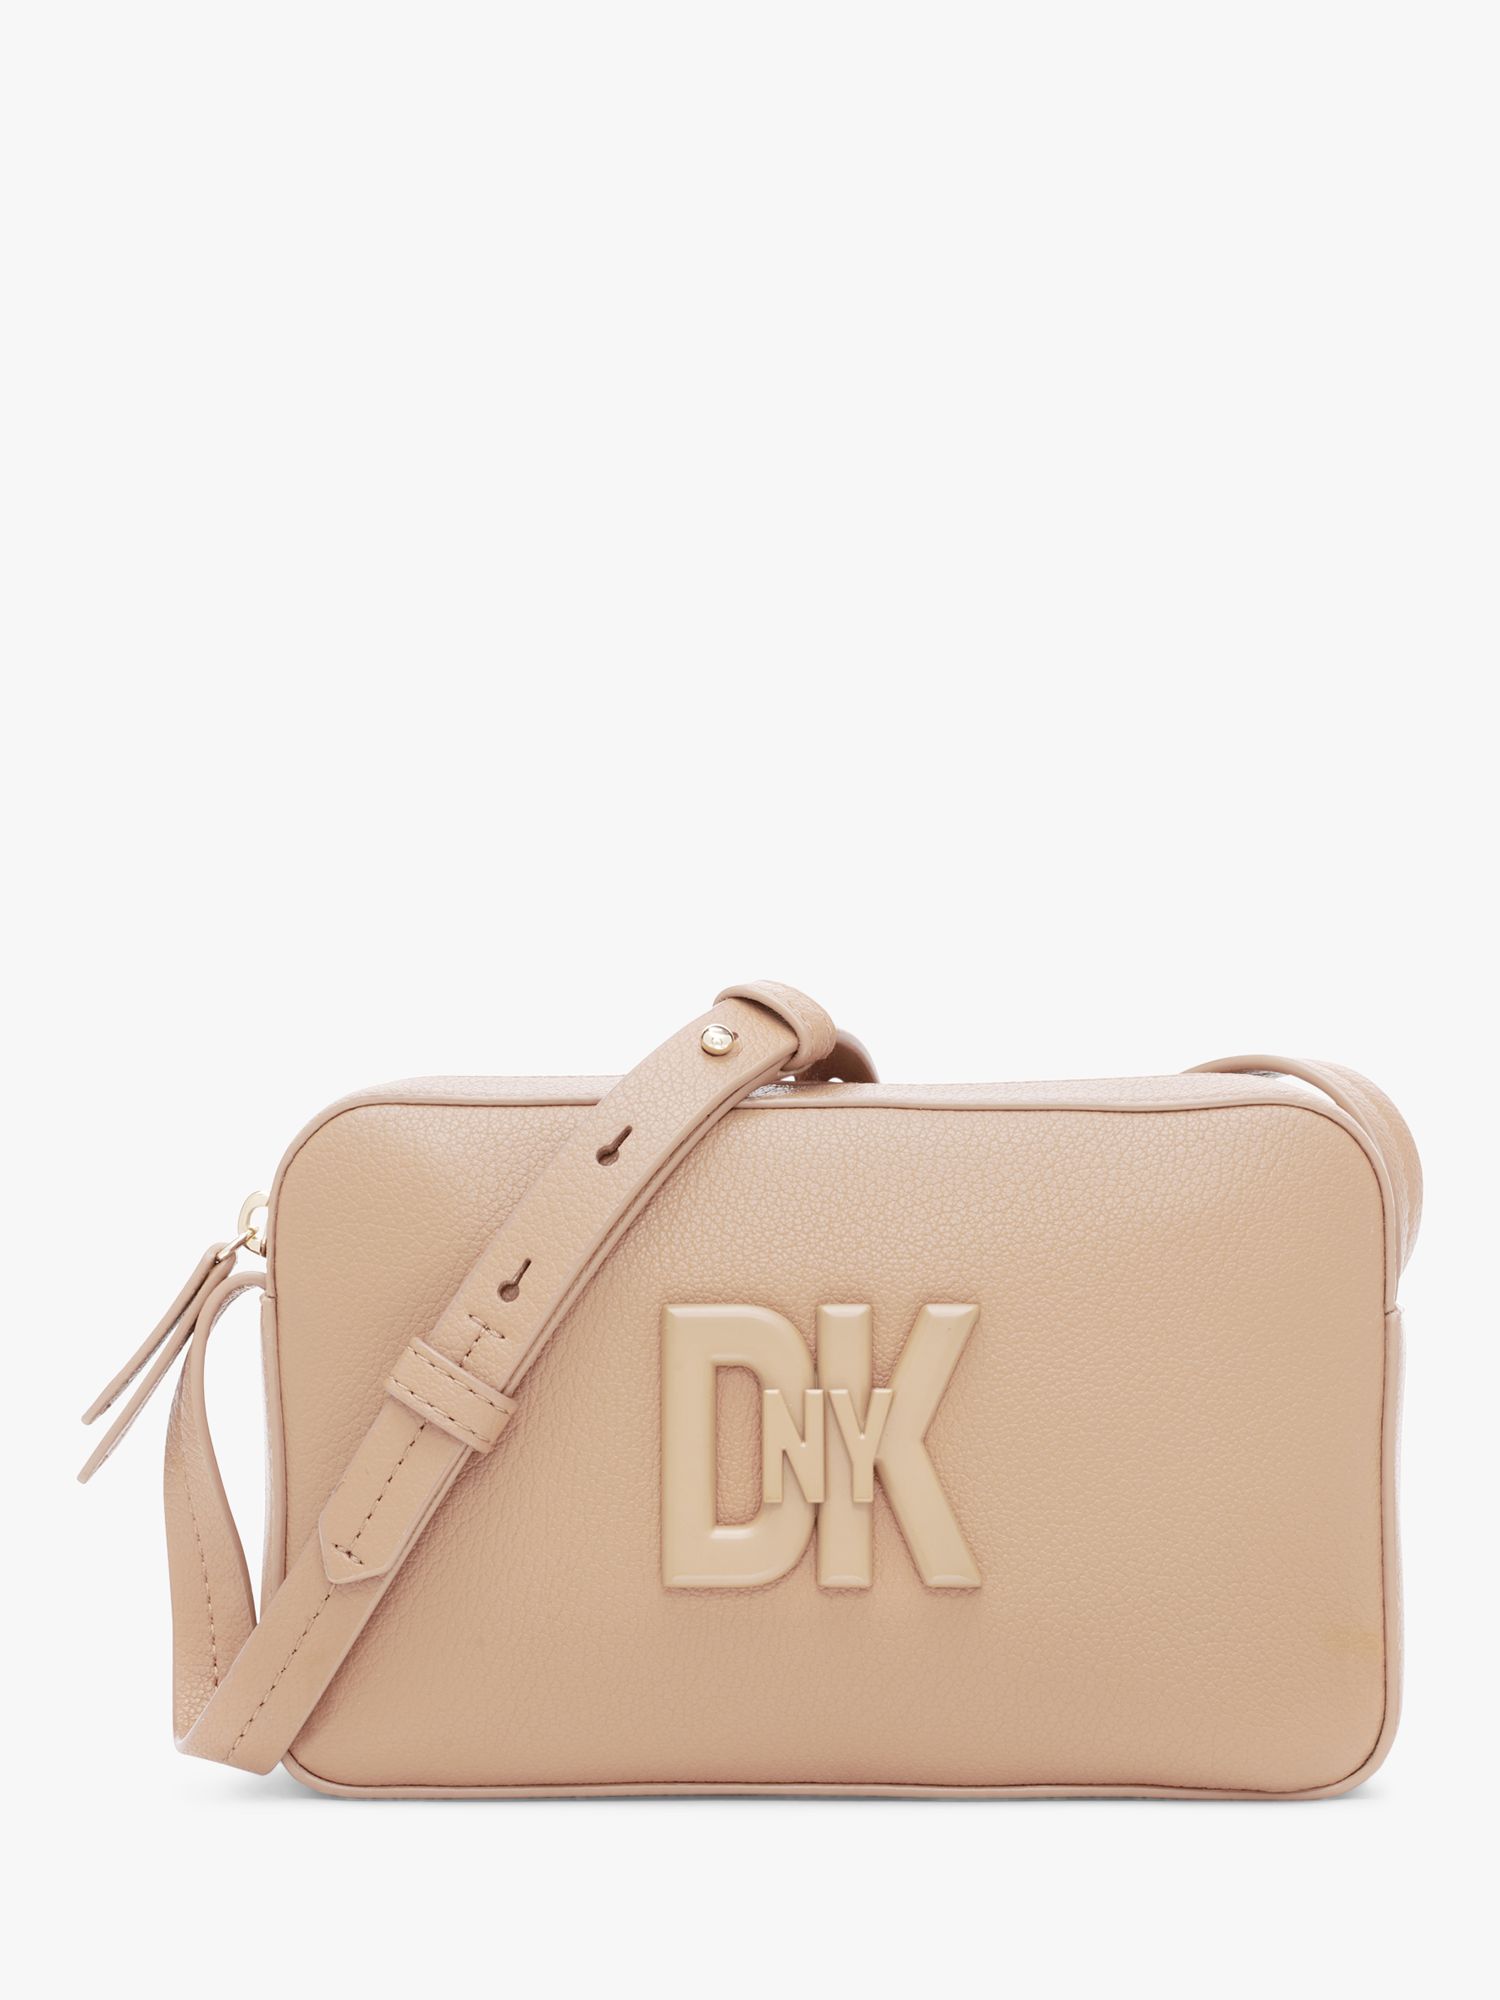 DKNY 7th Avenue Leather Camera Bag, Neutral